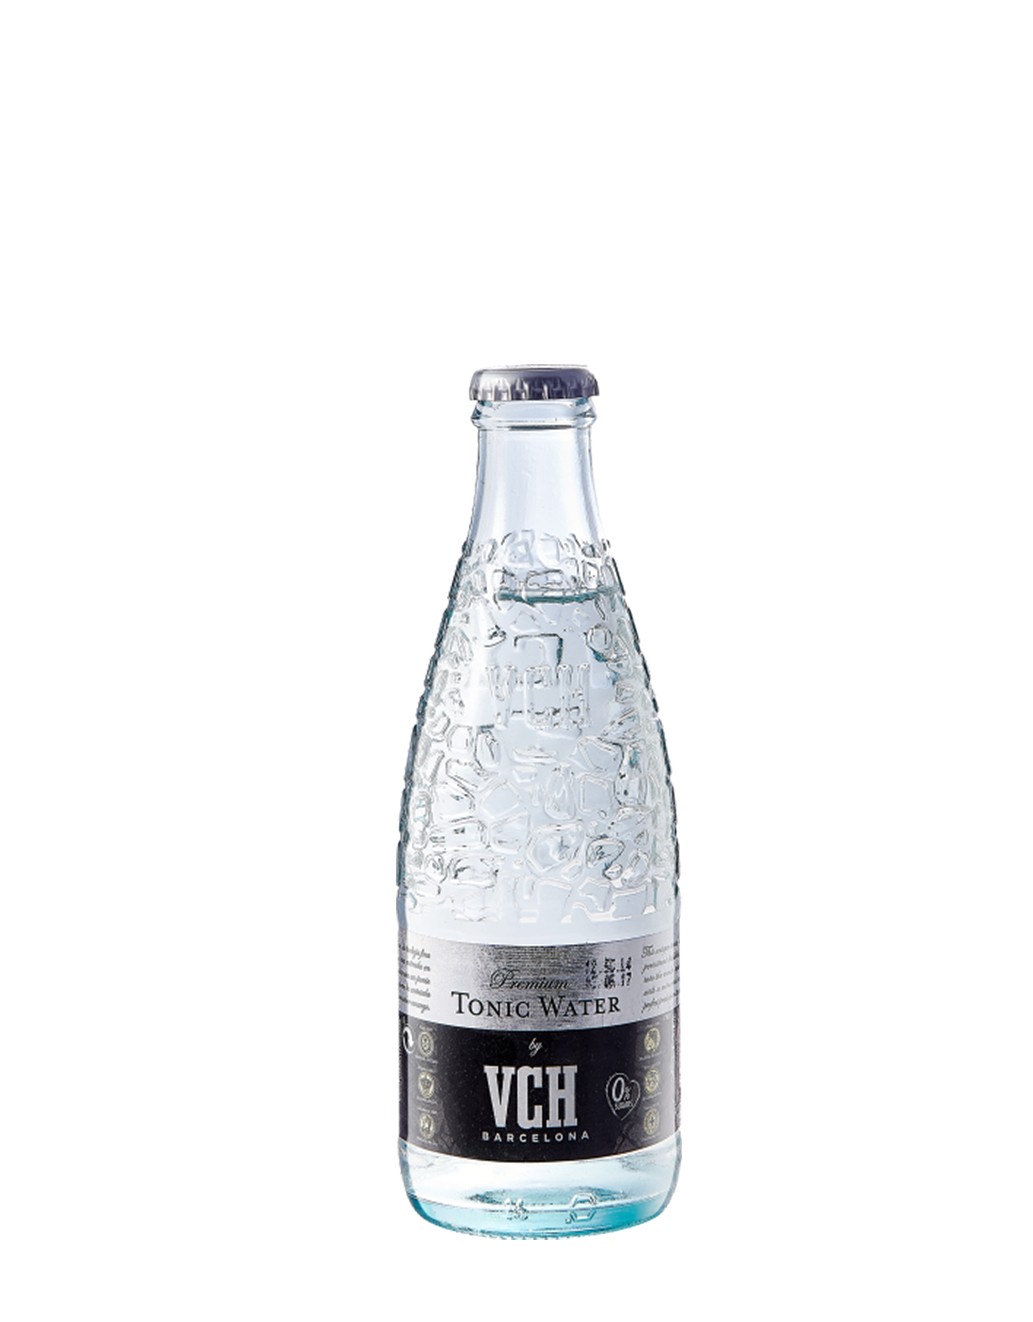 VICHY CATALAN - Acqua Tonica - Premium Tonic Water 